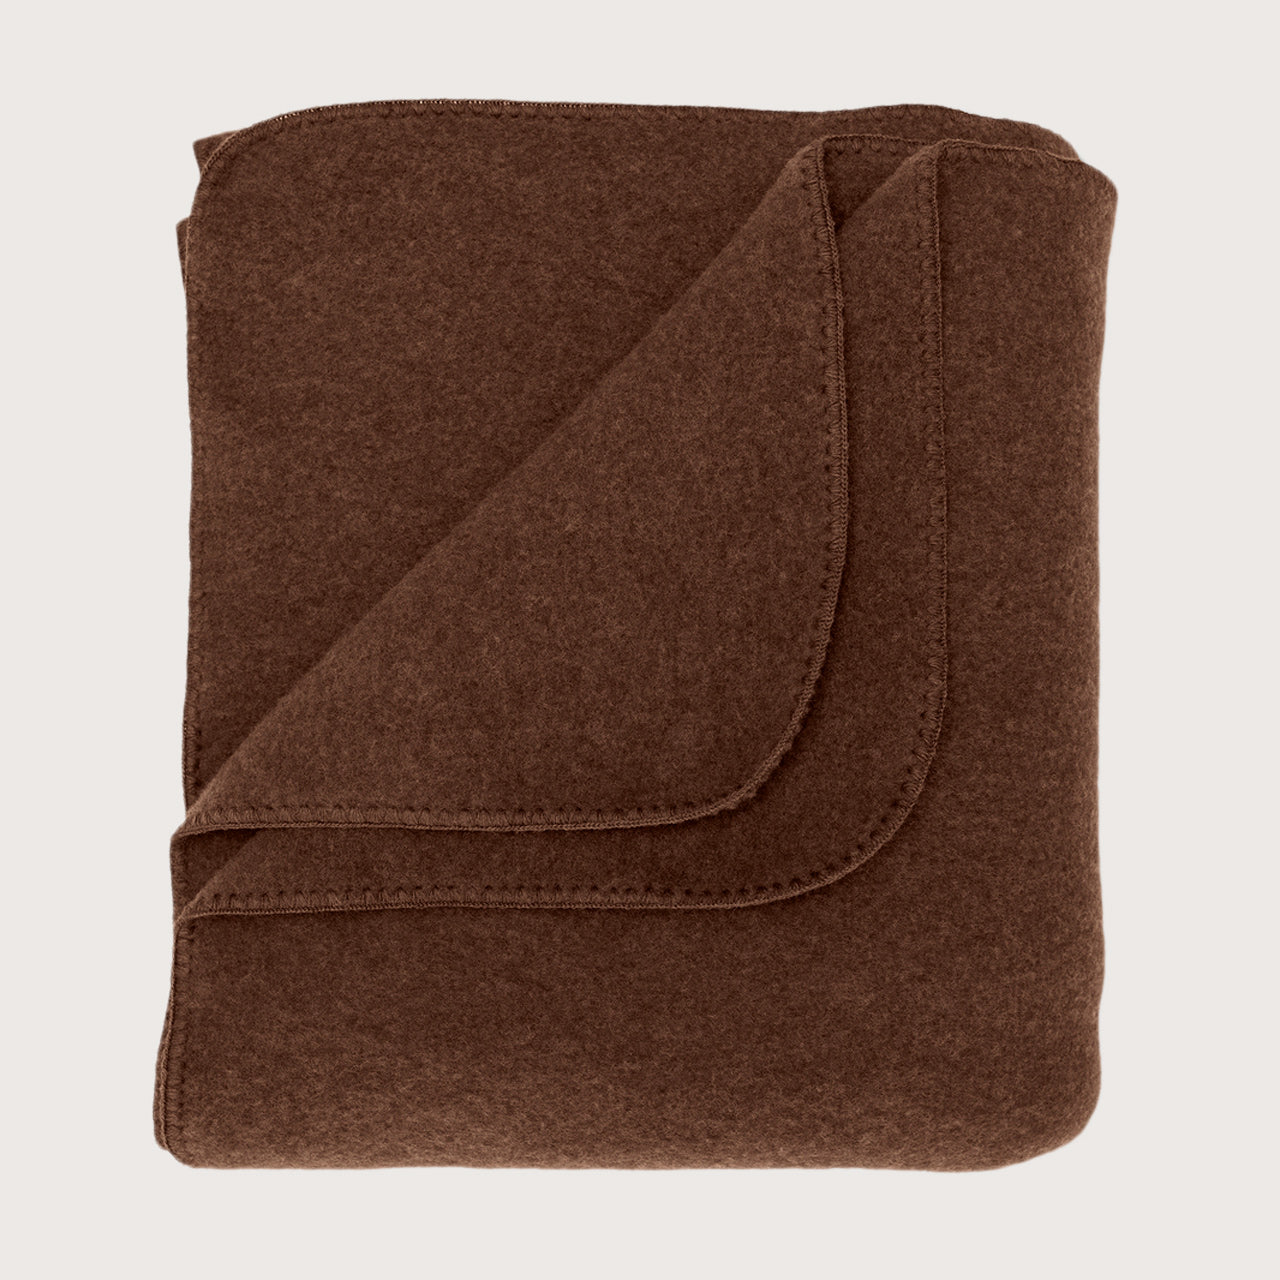 Organic Merino Wool Fleece Blanket - Cinnamon (180x150cm) *Arriving Autumn